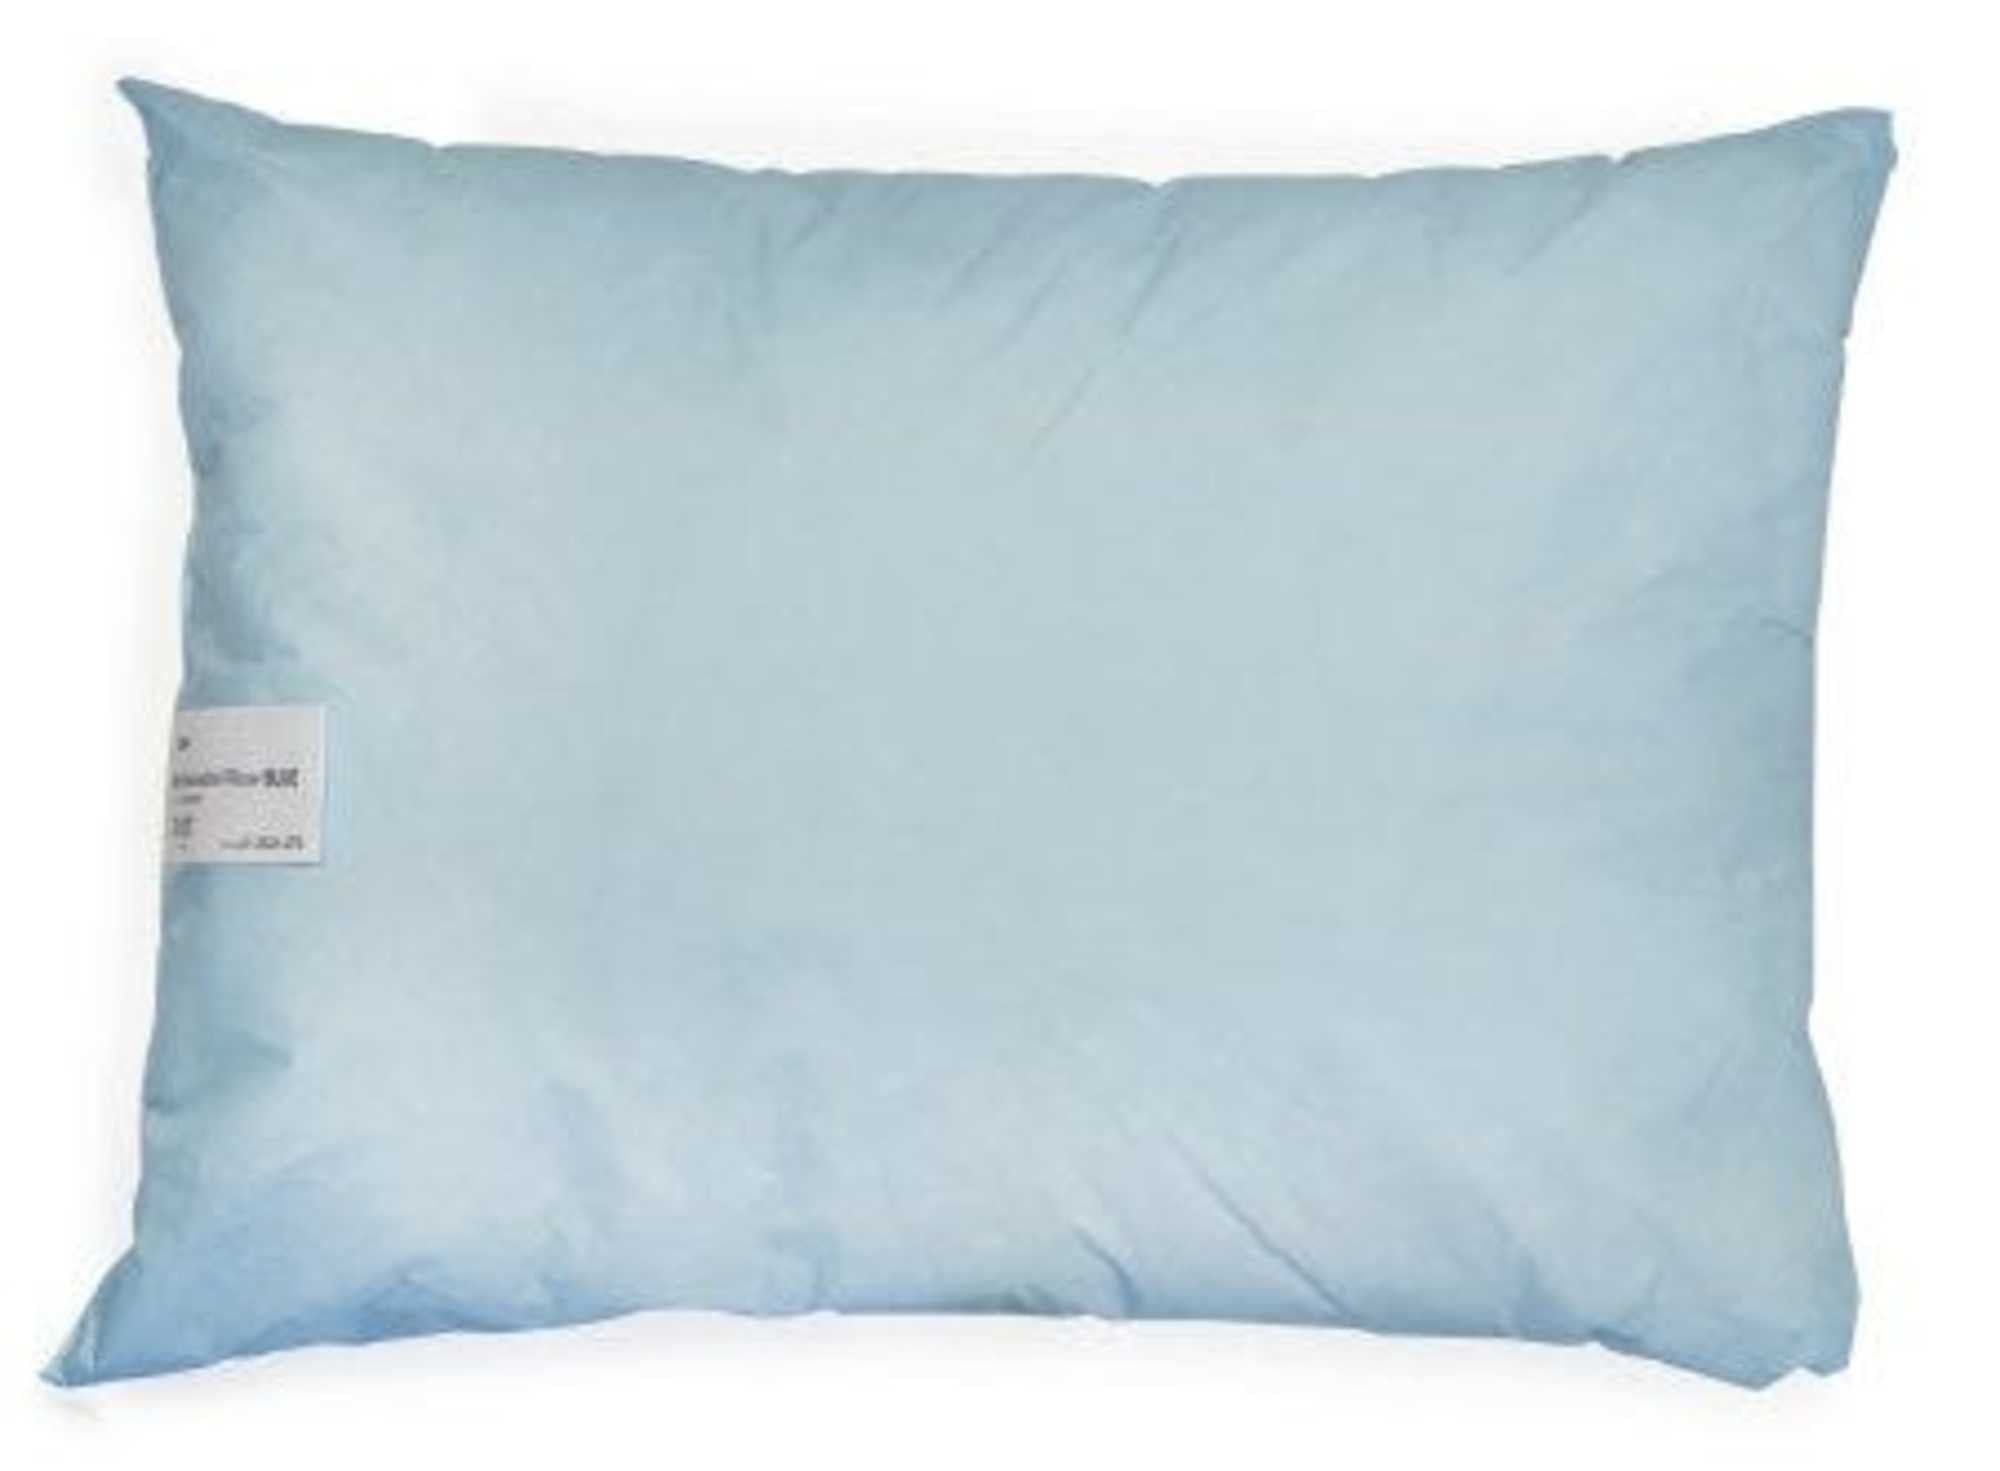 Envirosleep Dream Surrender Set of 2 Standard Pillows Found at Marriott Hotels 